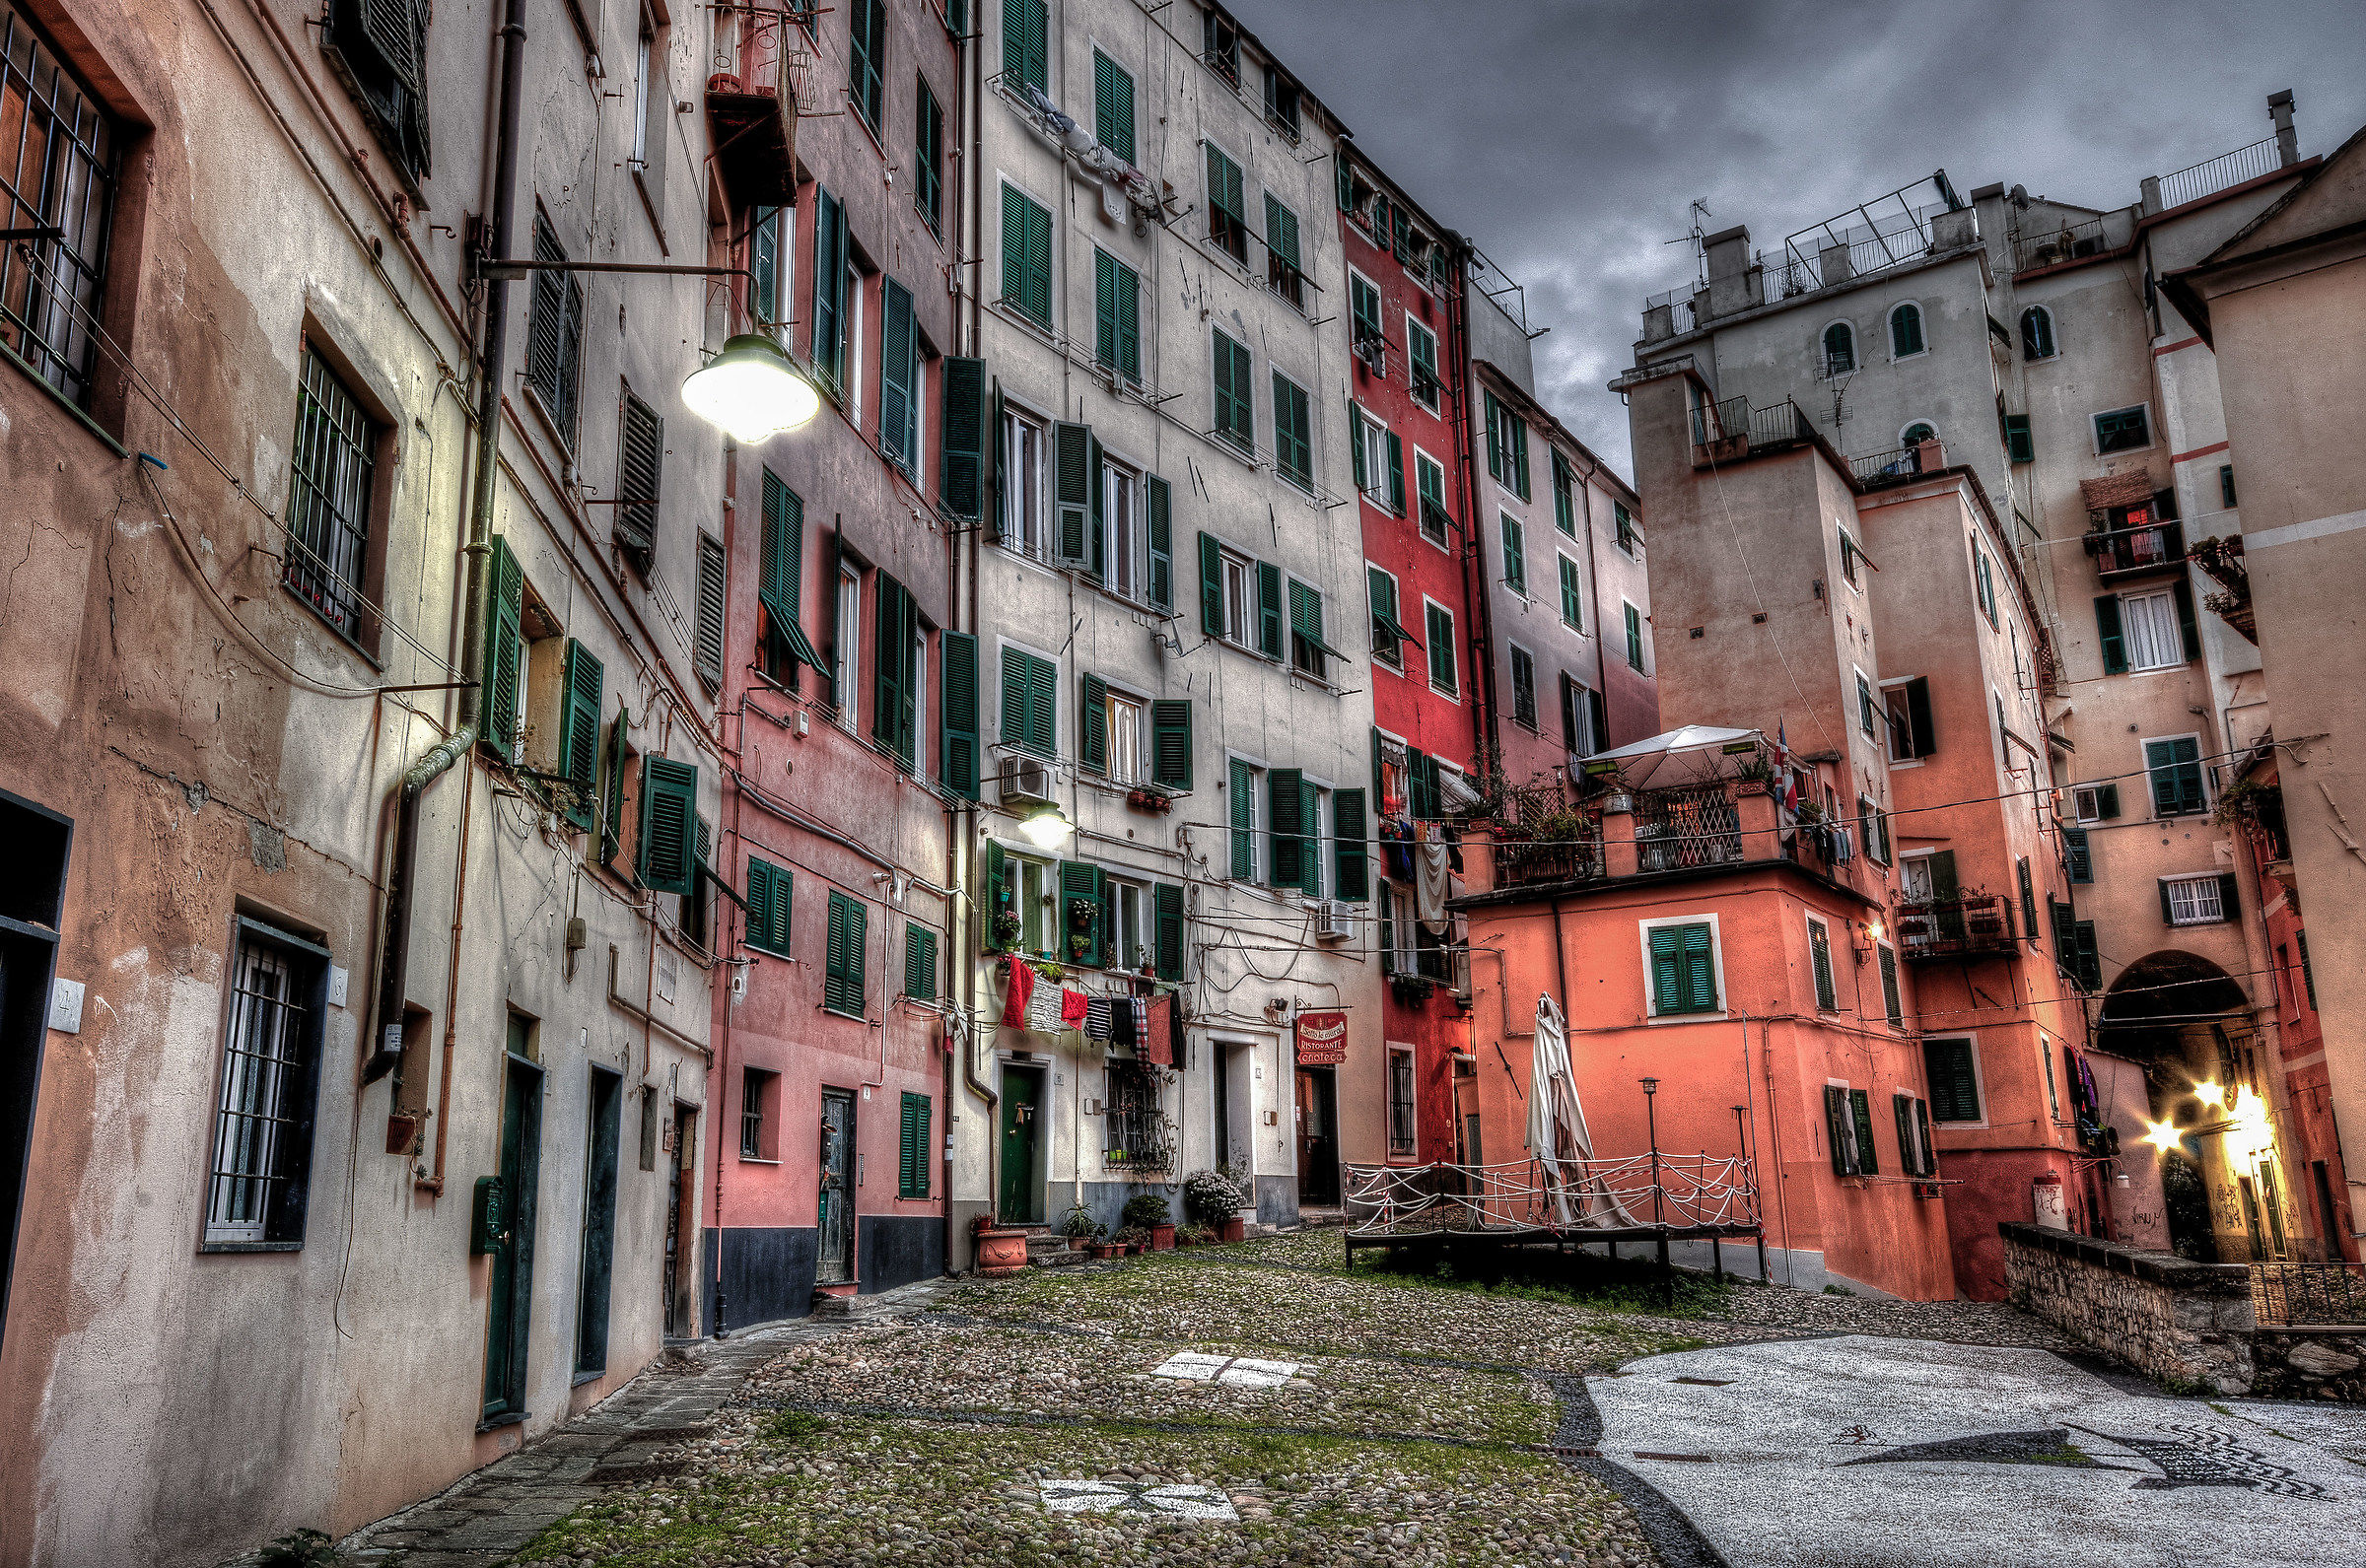 Campopisano-Genova, the square glimpse...